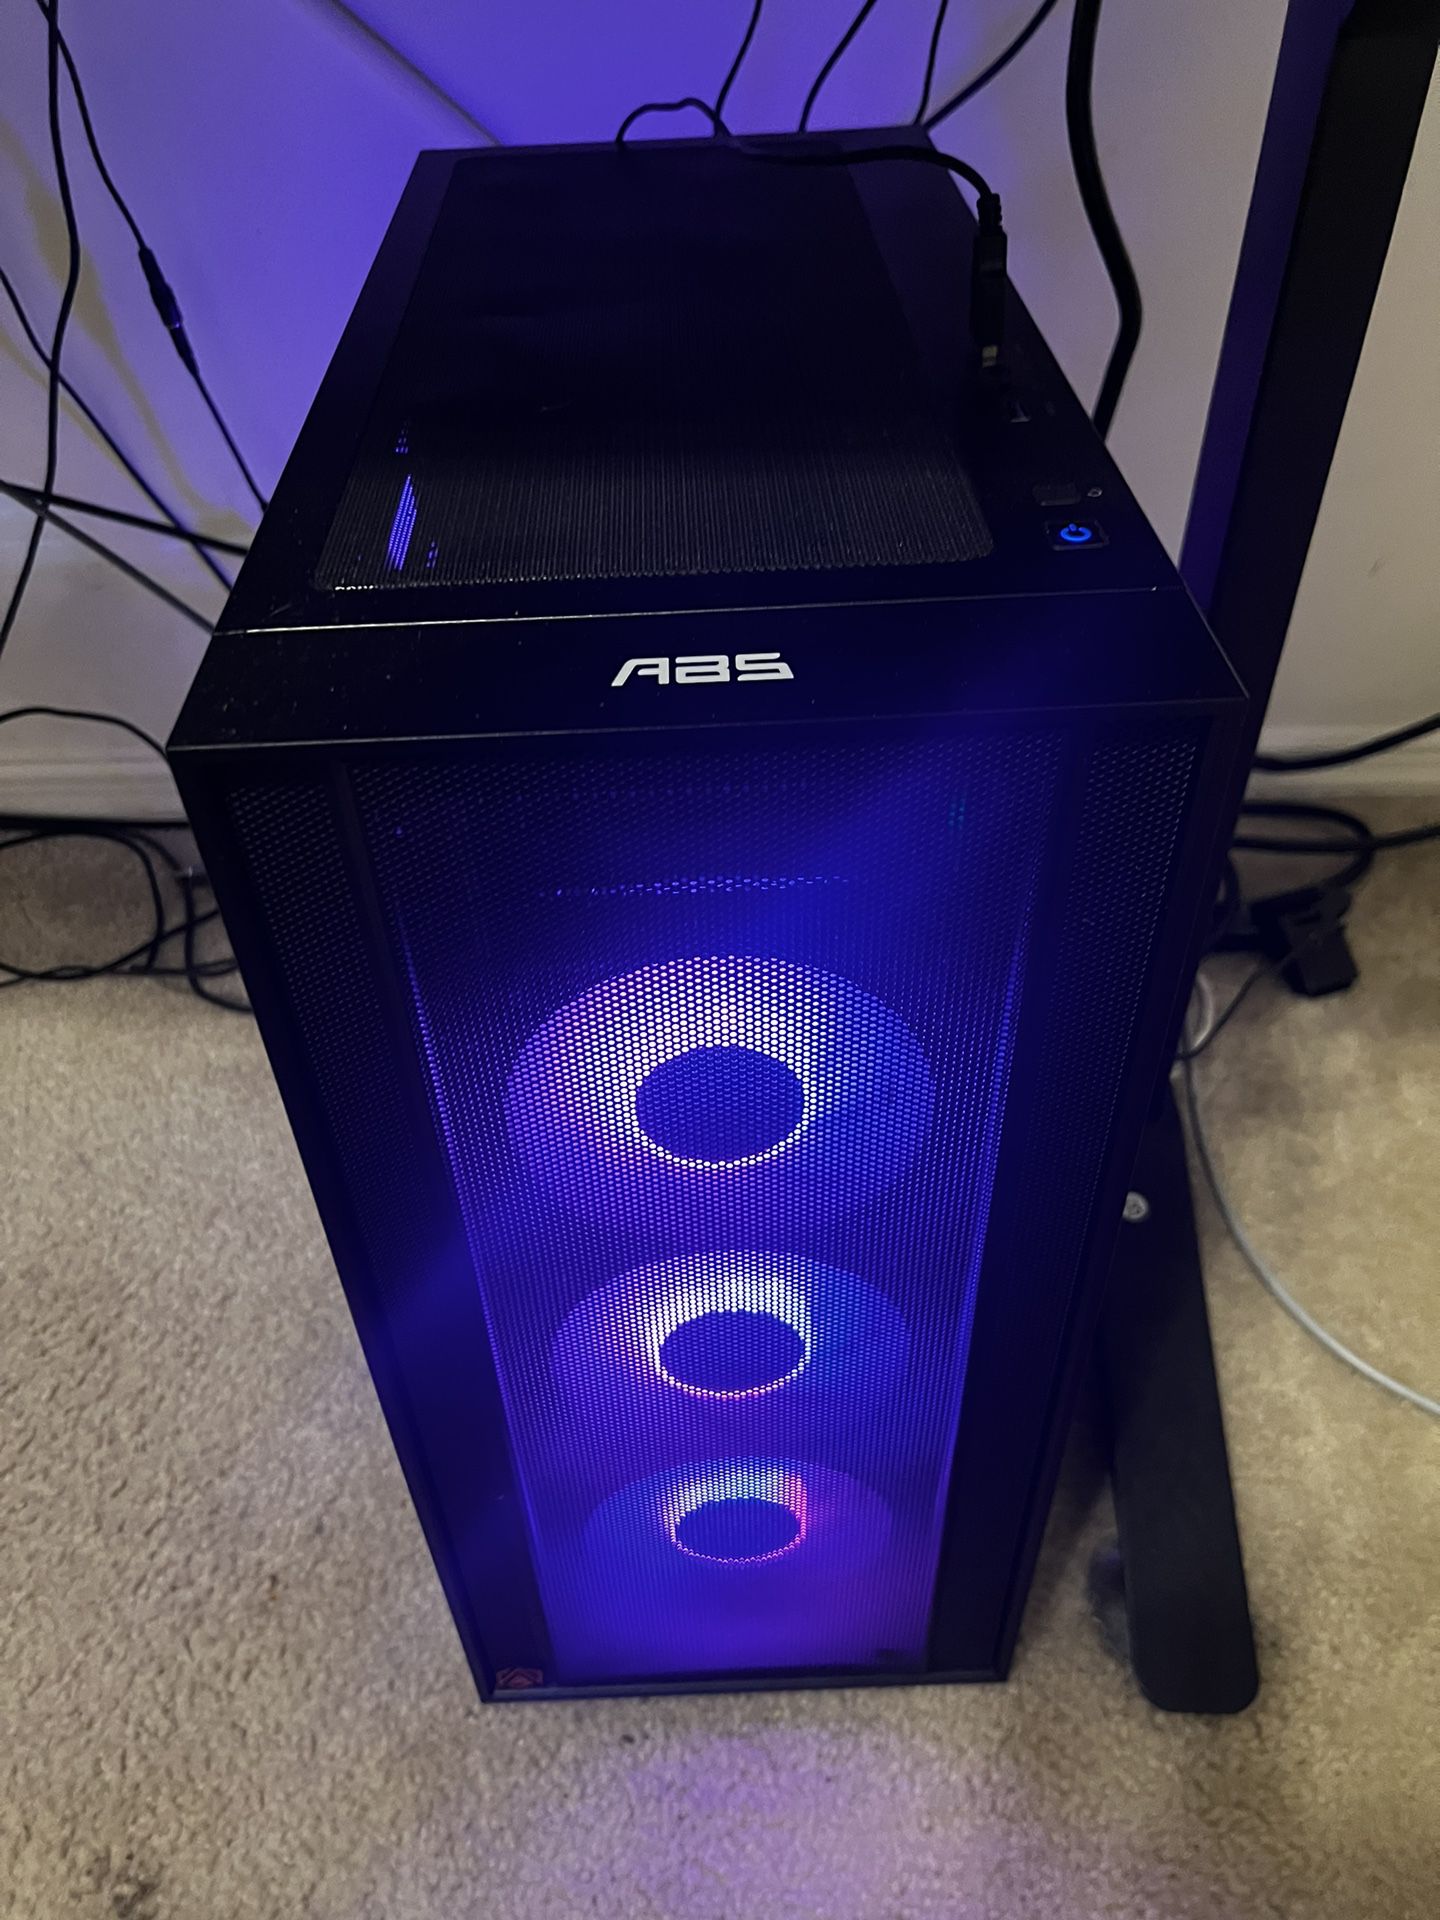 ABS Eurus Aqua High Performance Gaming PC 